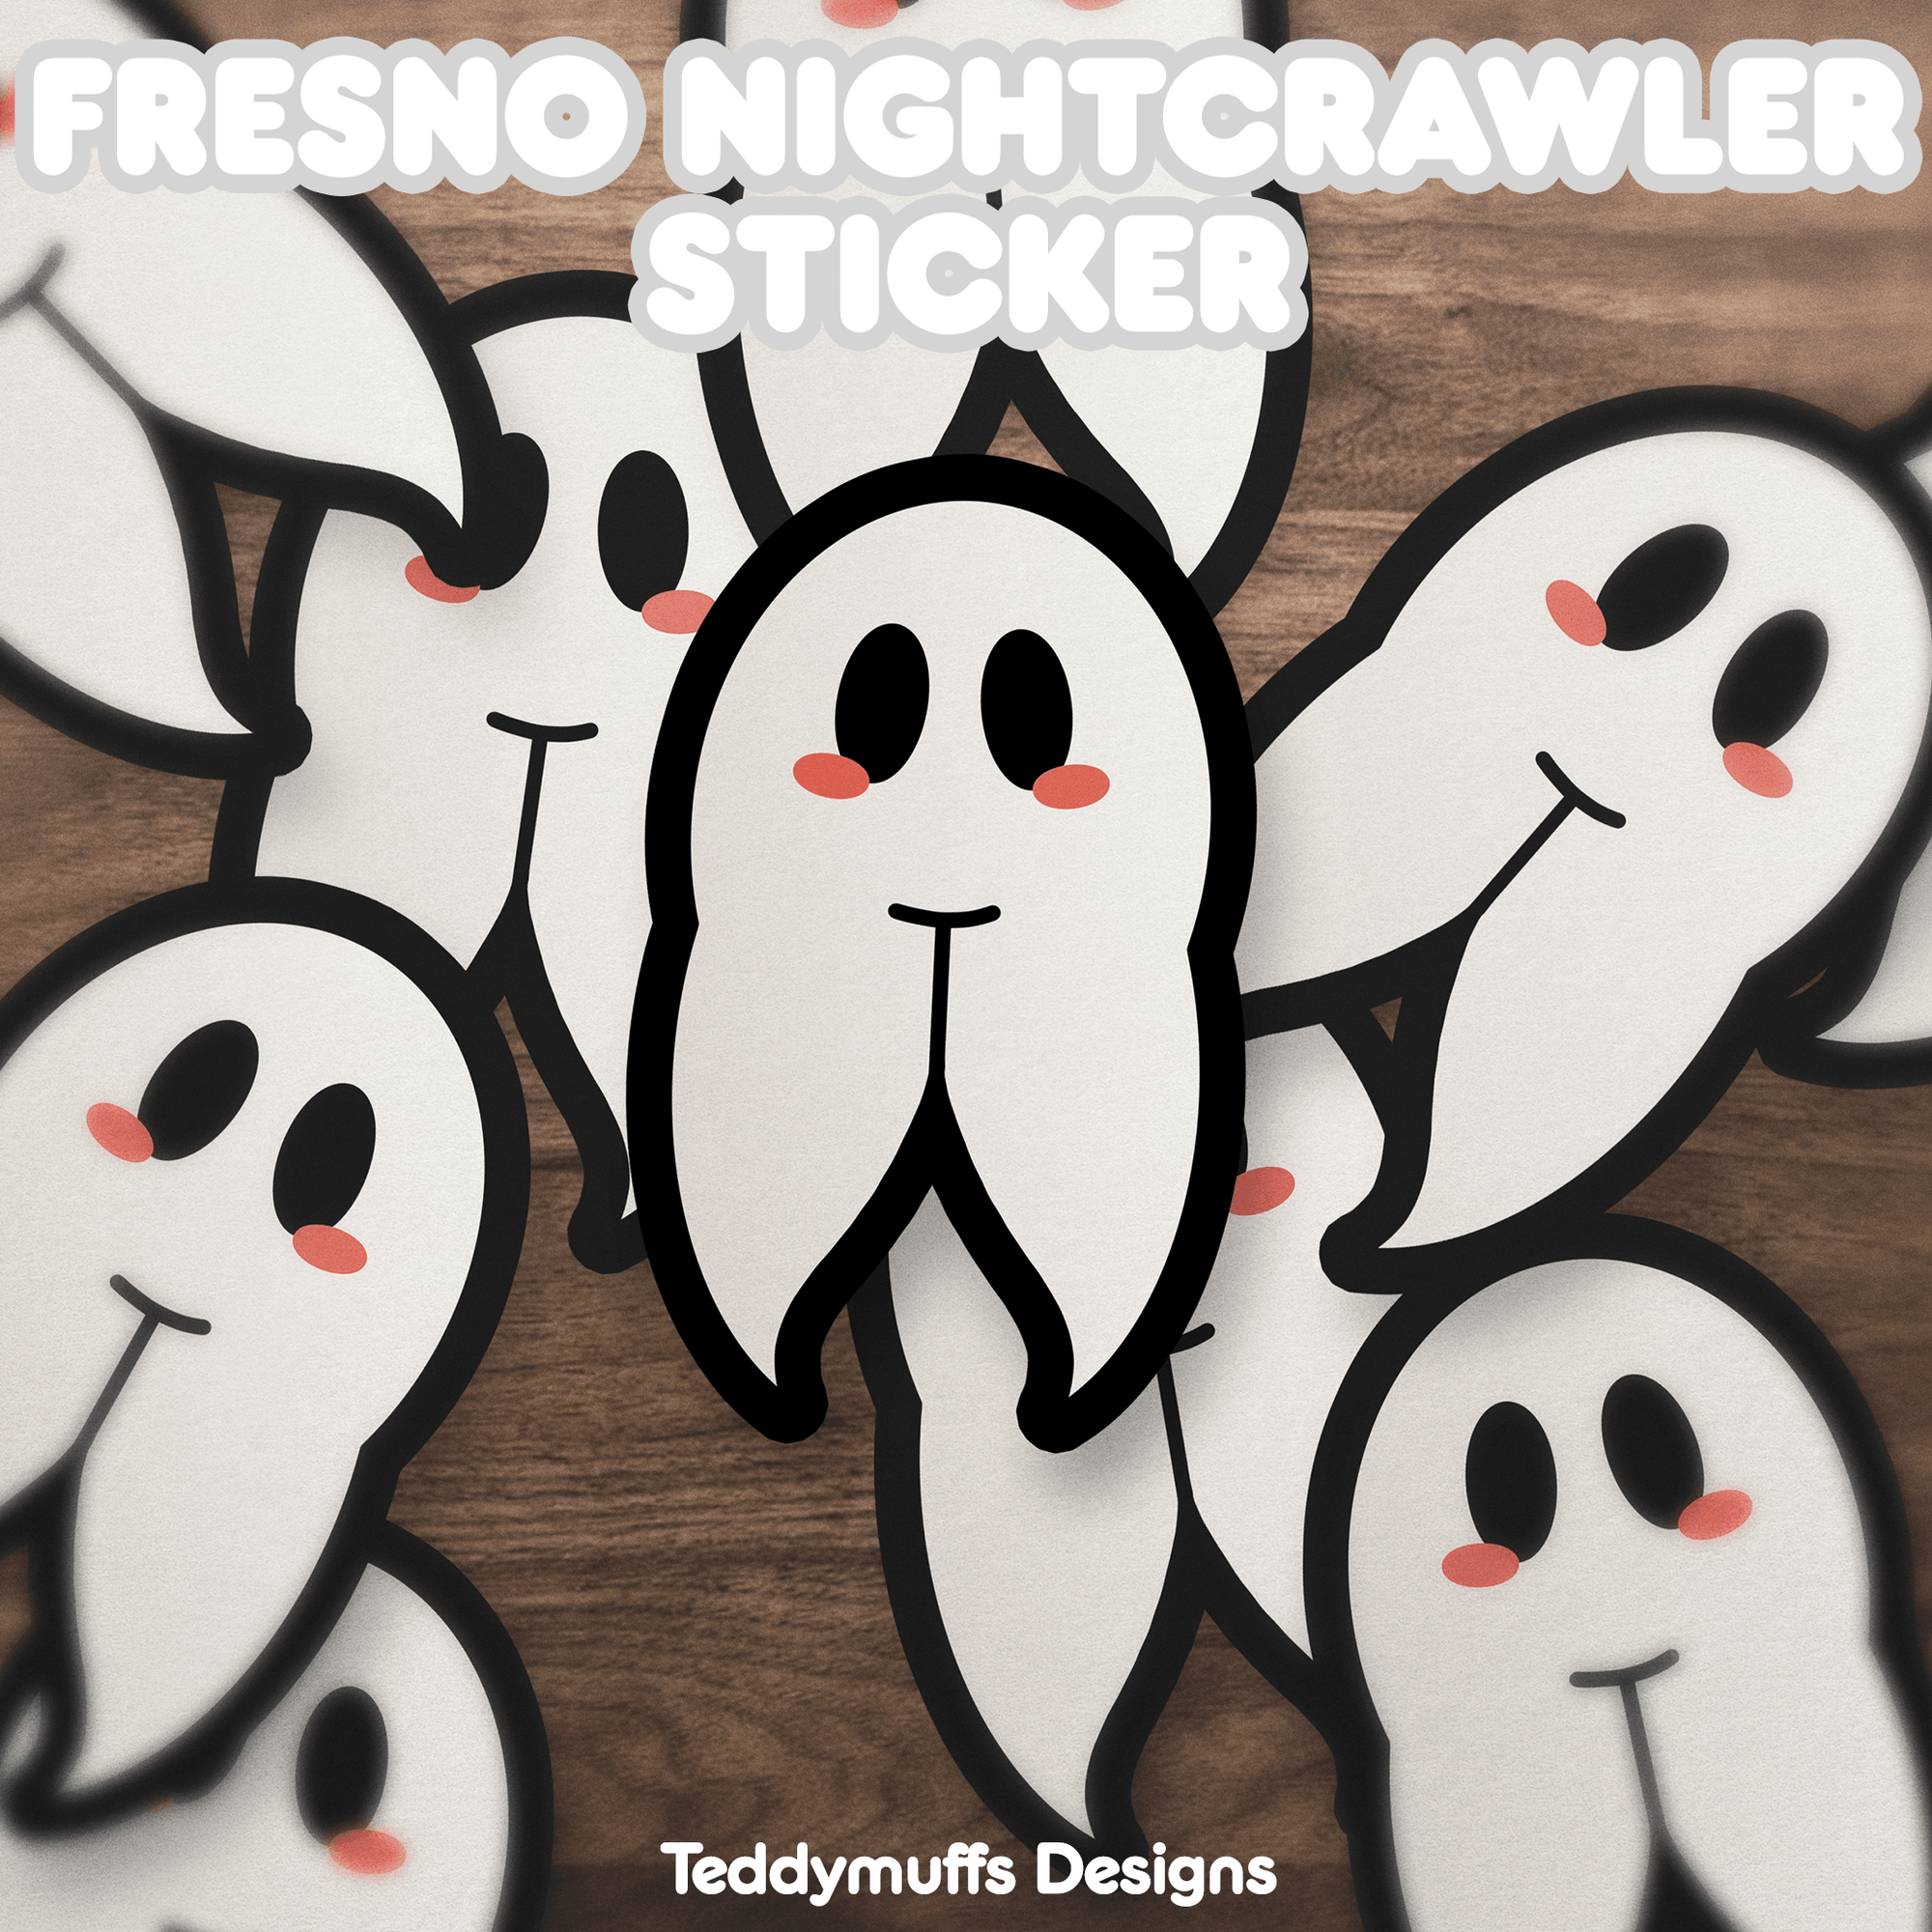 Fresno Night Crawler (Cryptid) Sticker - Teddymuffs Designs